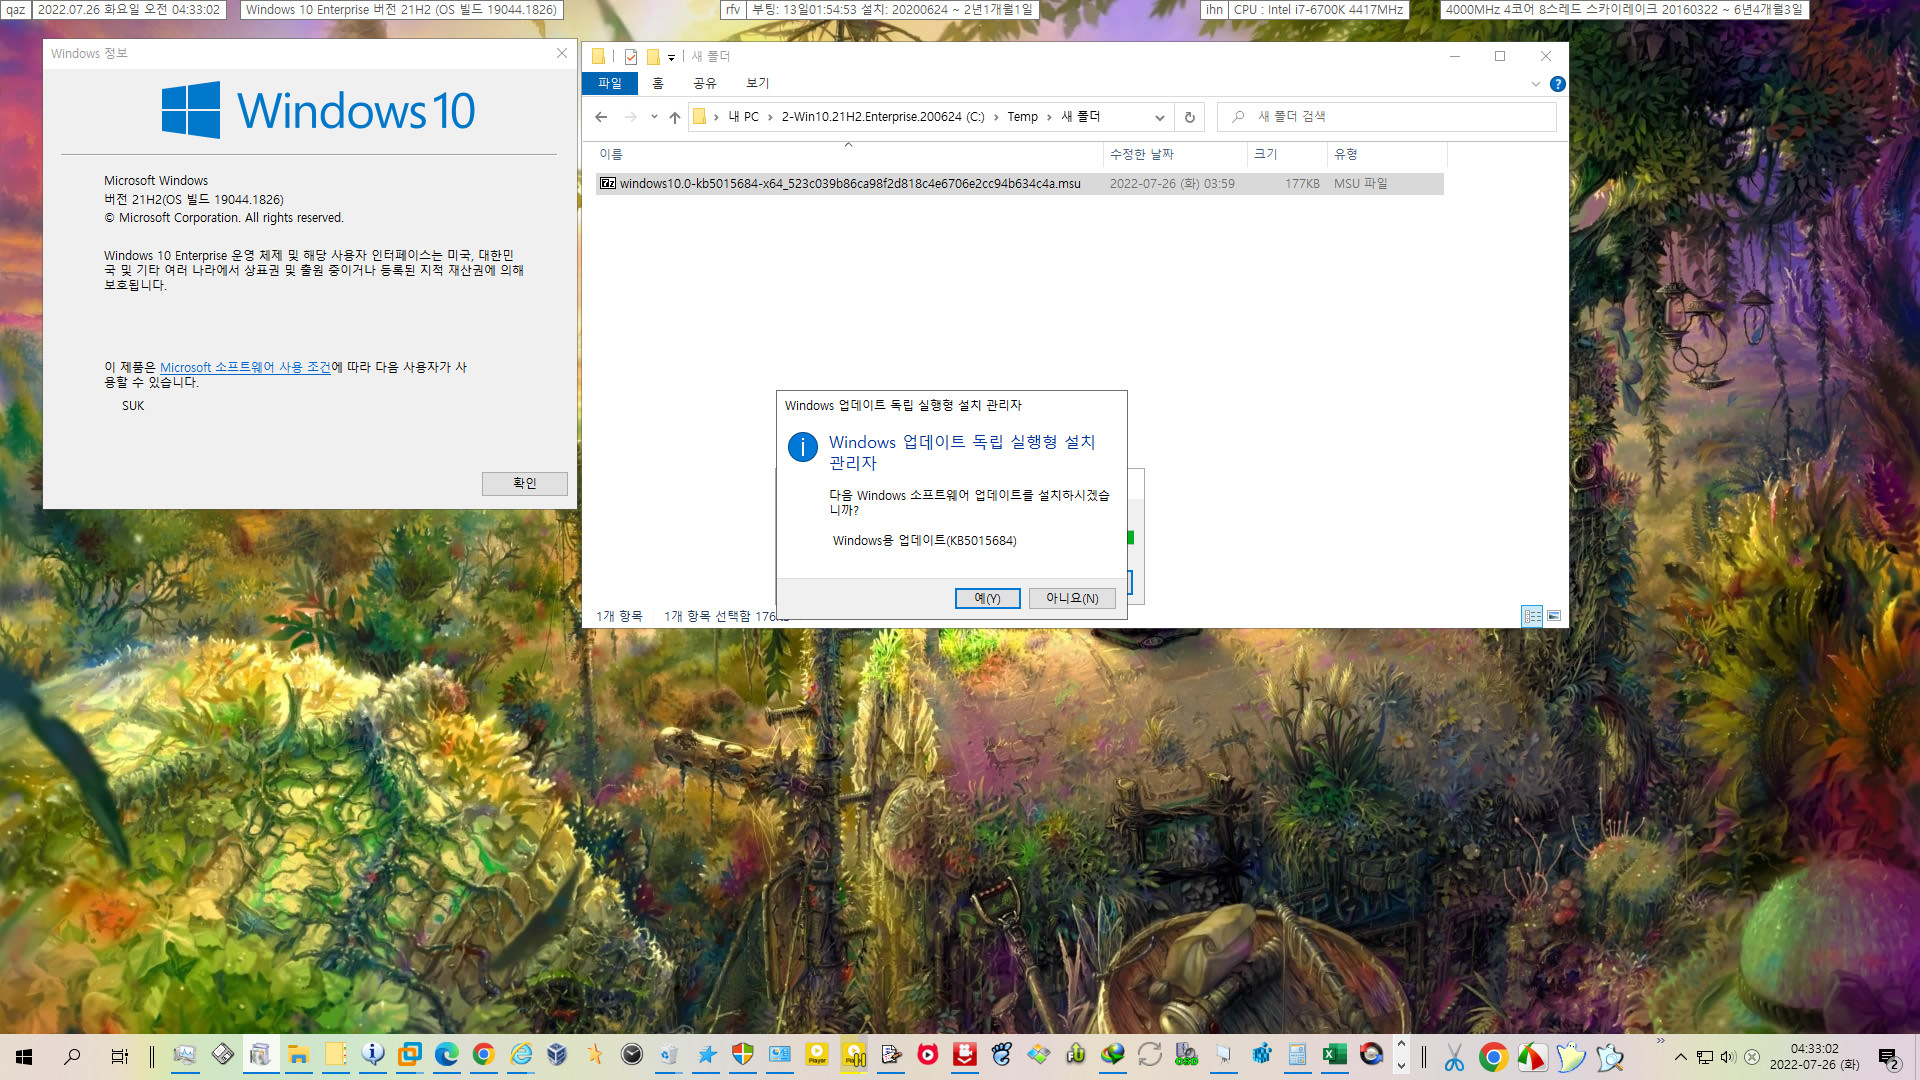 Windows 10 버전 22H2 기능 업데이트 KB5015684 - 19045 빌드 - 1번째 msu 파일 - 실컴 설치 2022-07-26_043302.jpg